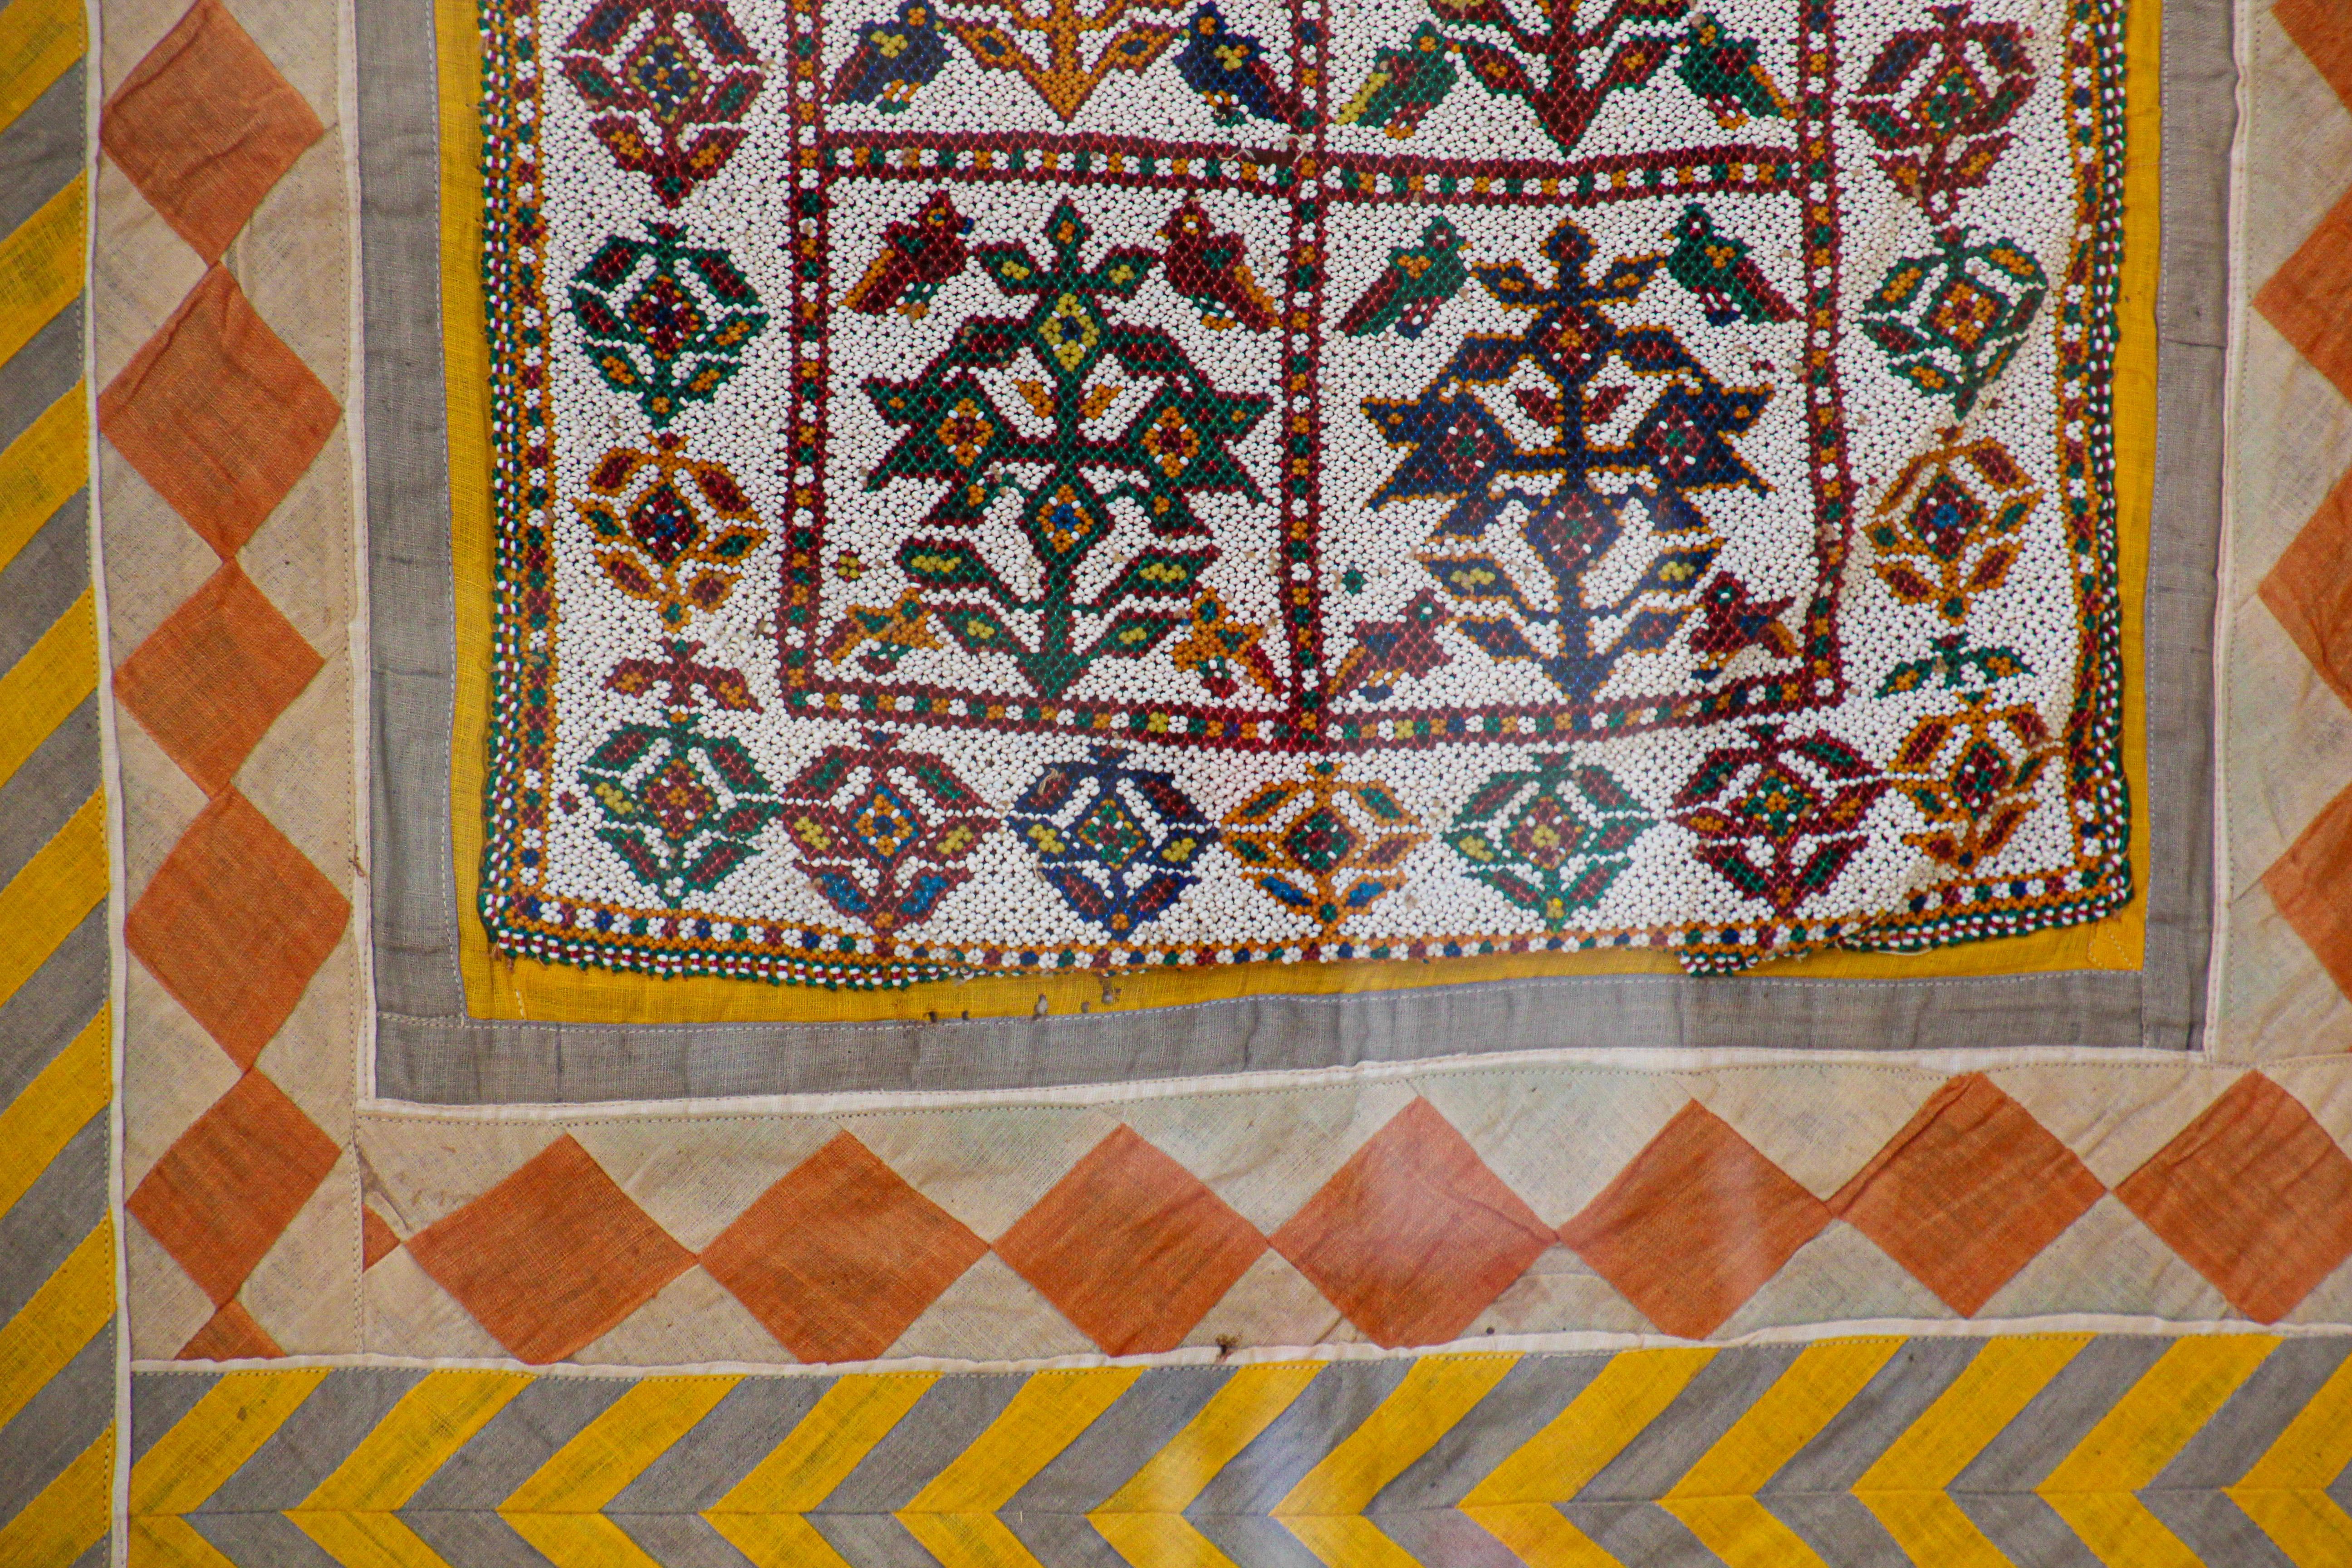 Embroidered Vintage Gujarat Saurashta Ethnic Beaded Textile India Framed For Sale